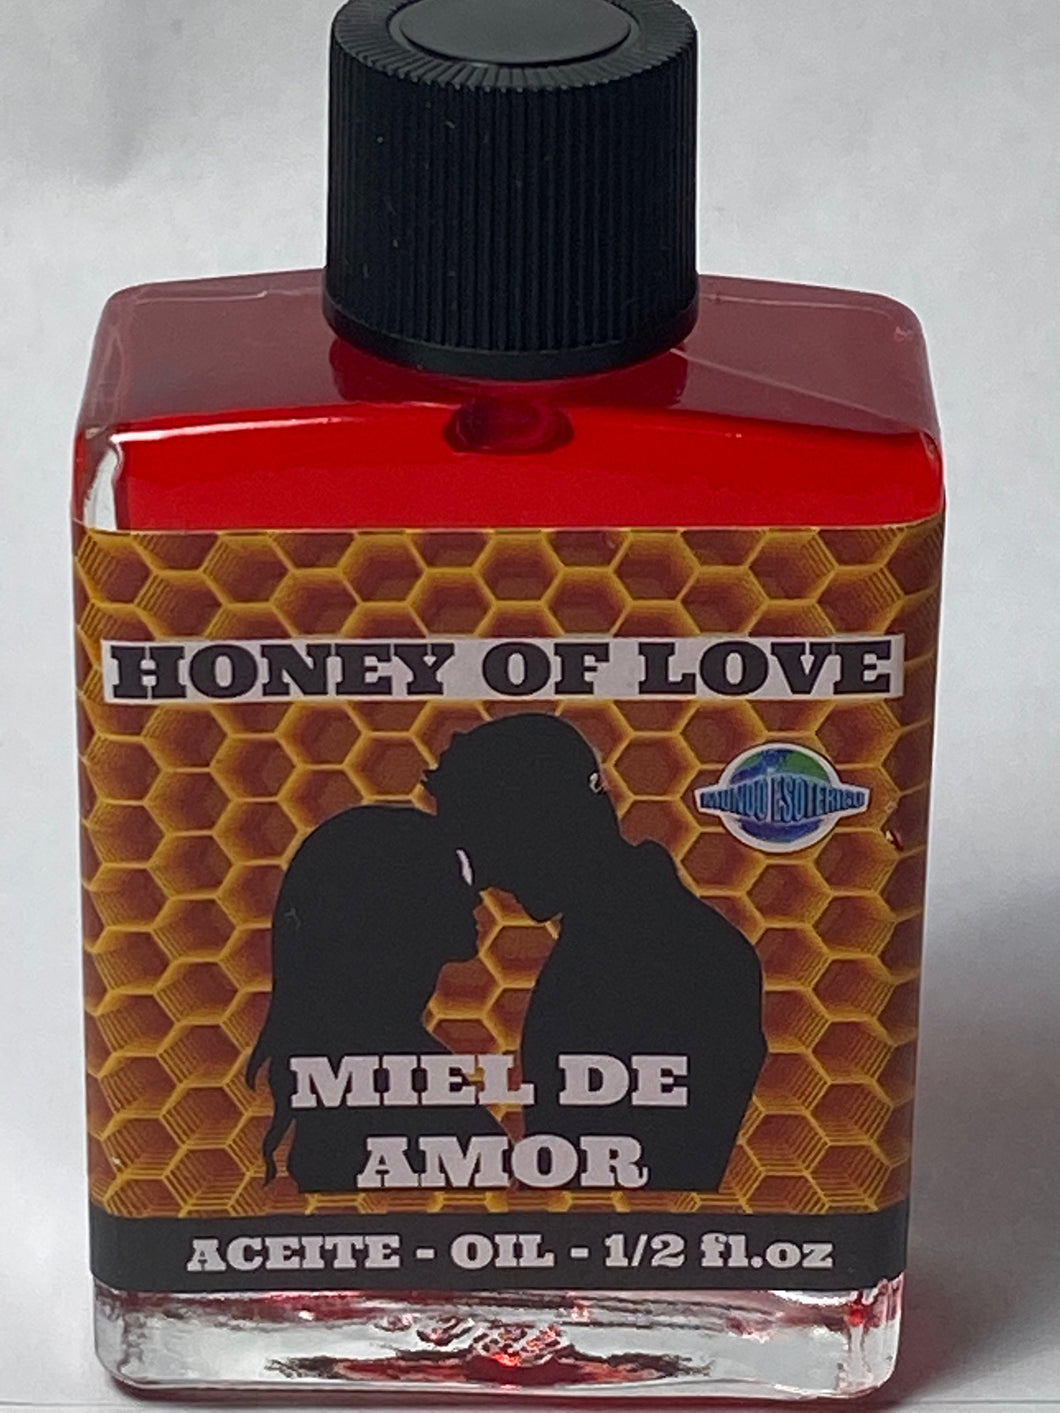 Honey of love